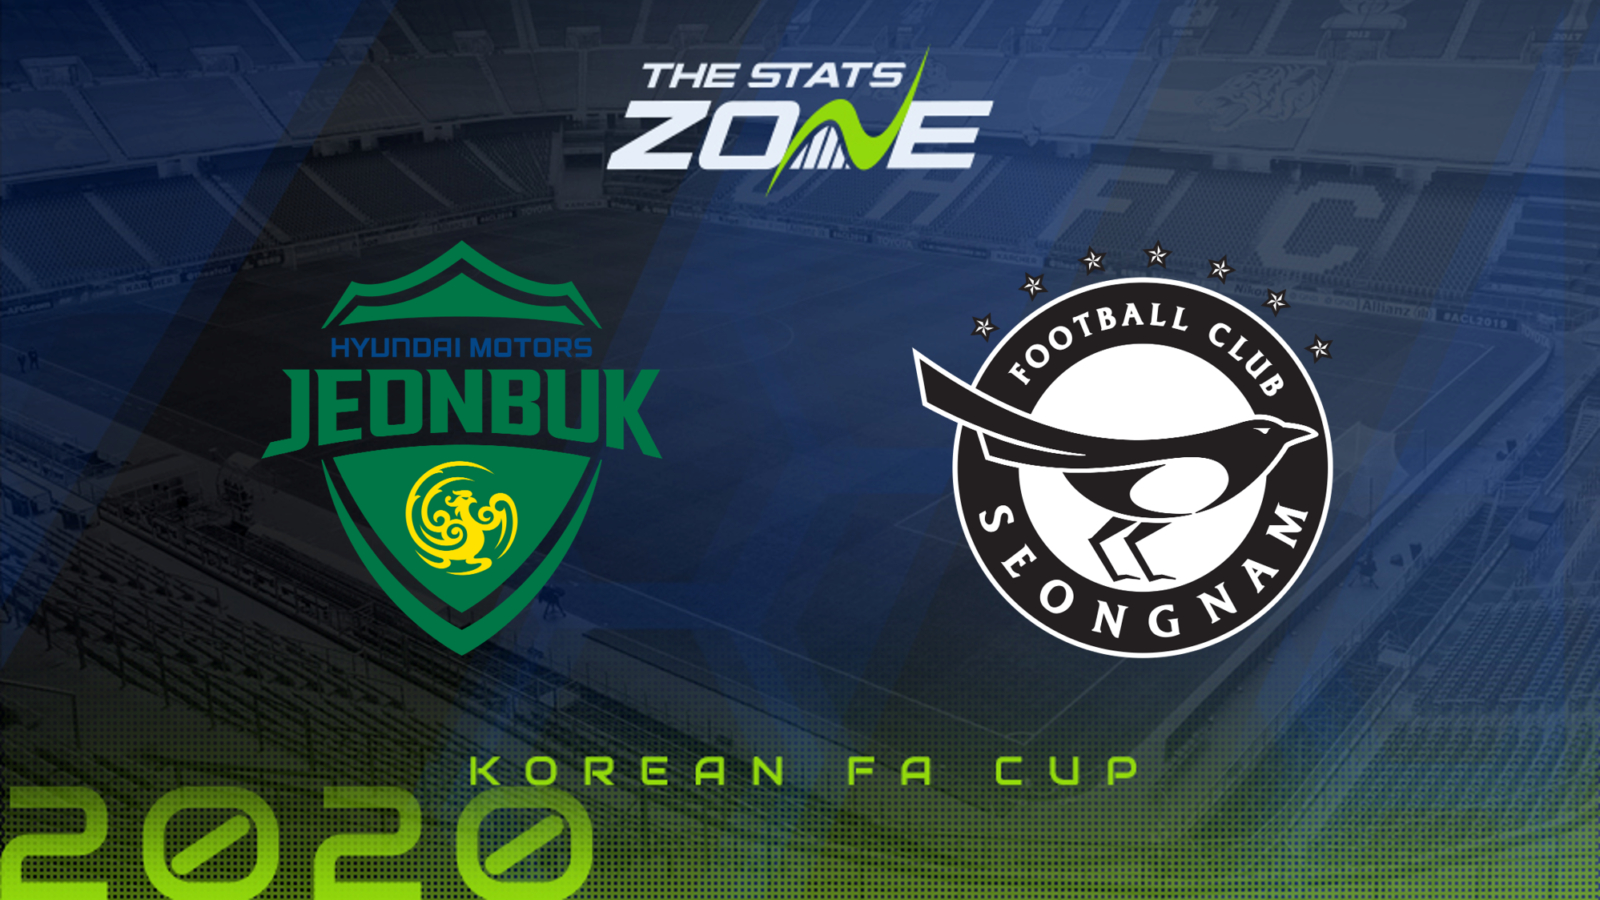 Korean Fa Cup Jeonbuk Motors Vs Seongnam Preview Prediction The Stats Zone